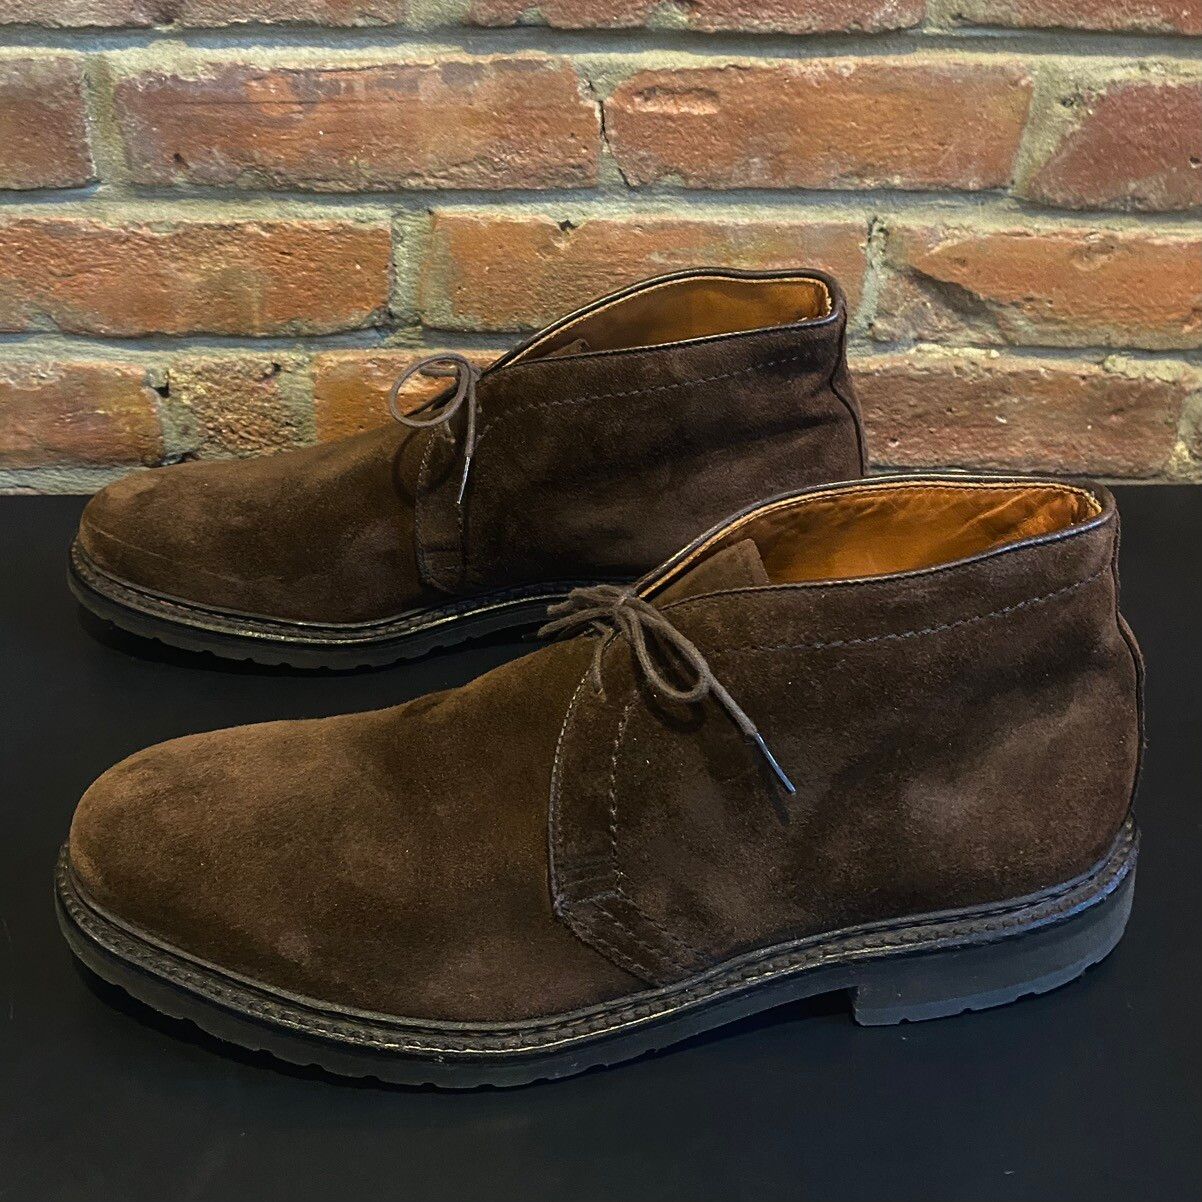 Alden Alden Chocolate Dark Brown Suede Chukka Boots on lug sole Size US 11.5 / EU 44-45 - 1 Preview